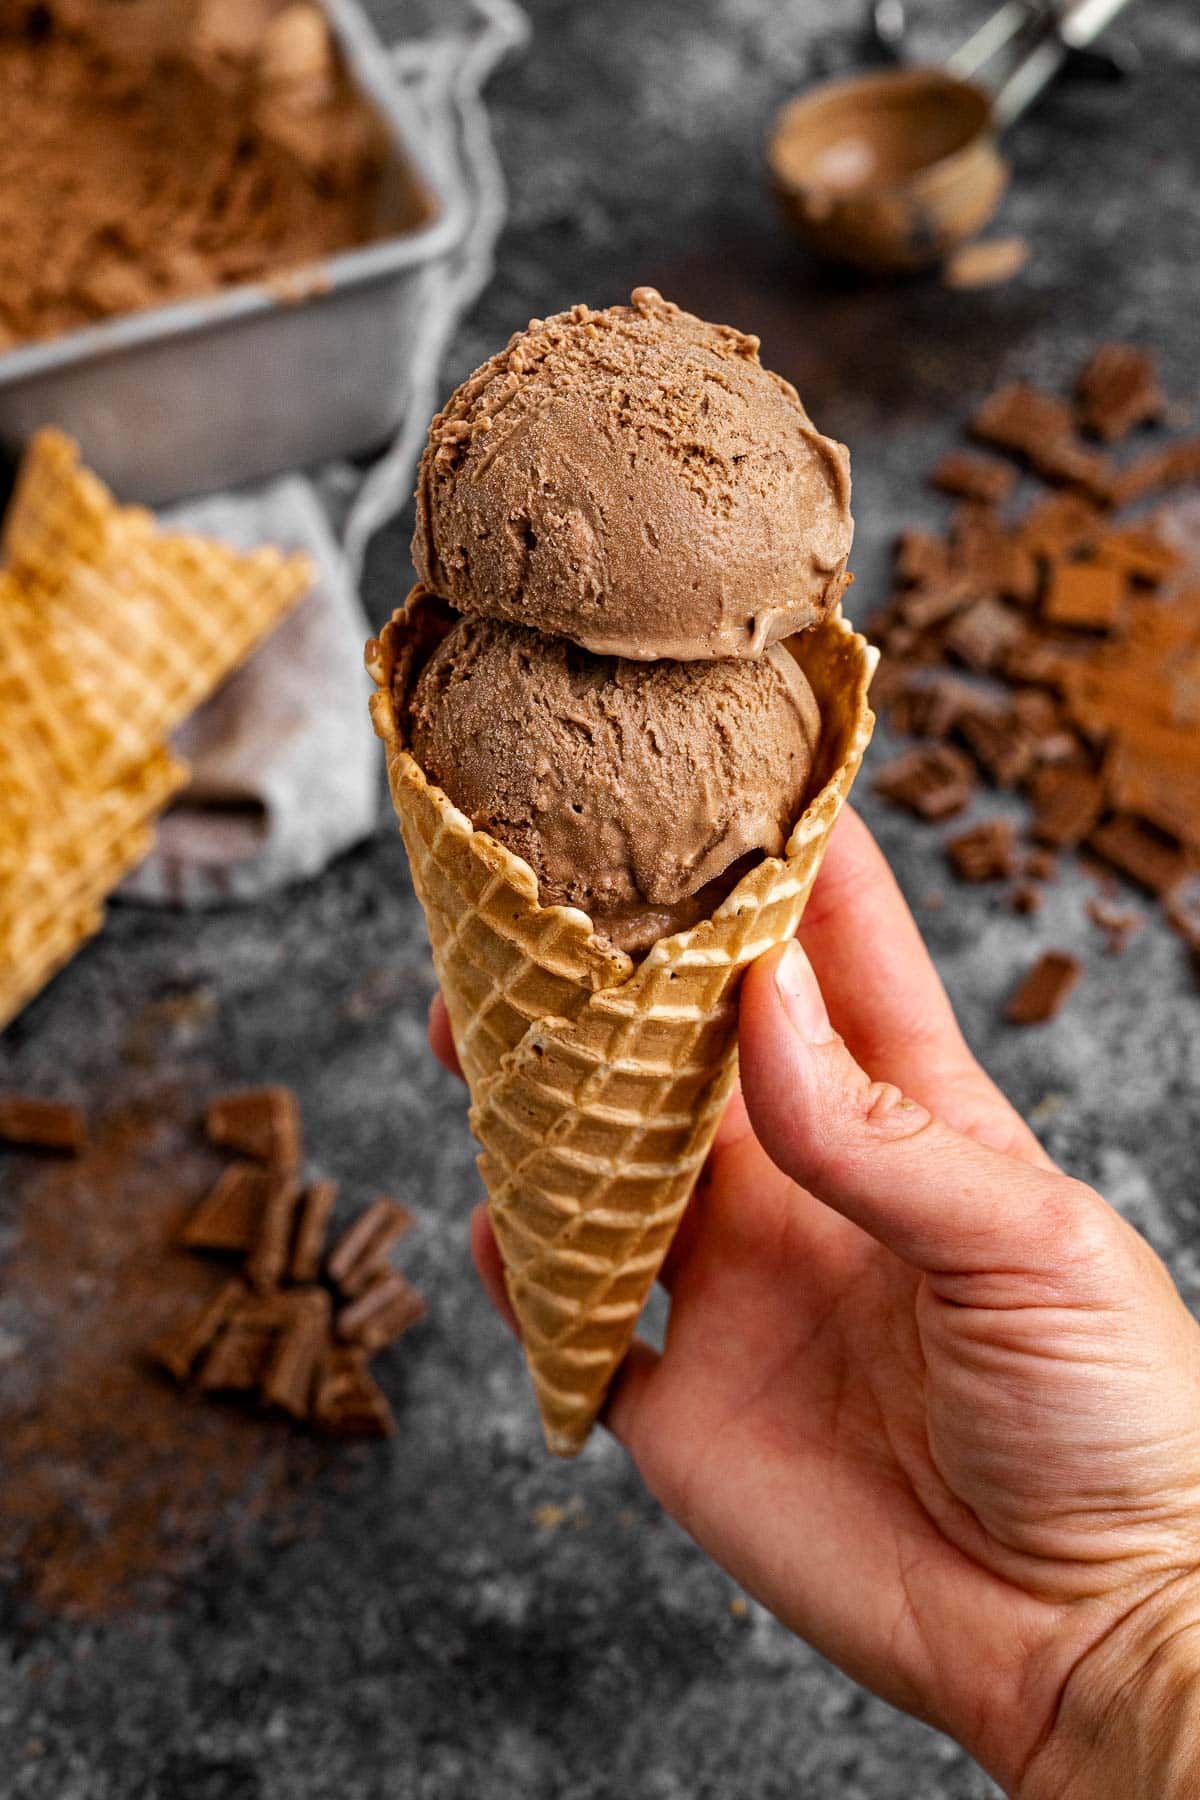 Chocolate Ice Cream scoops in cone